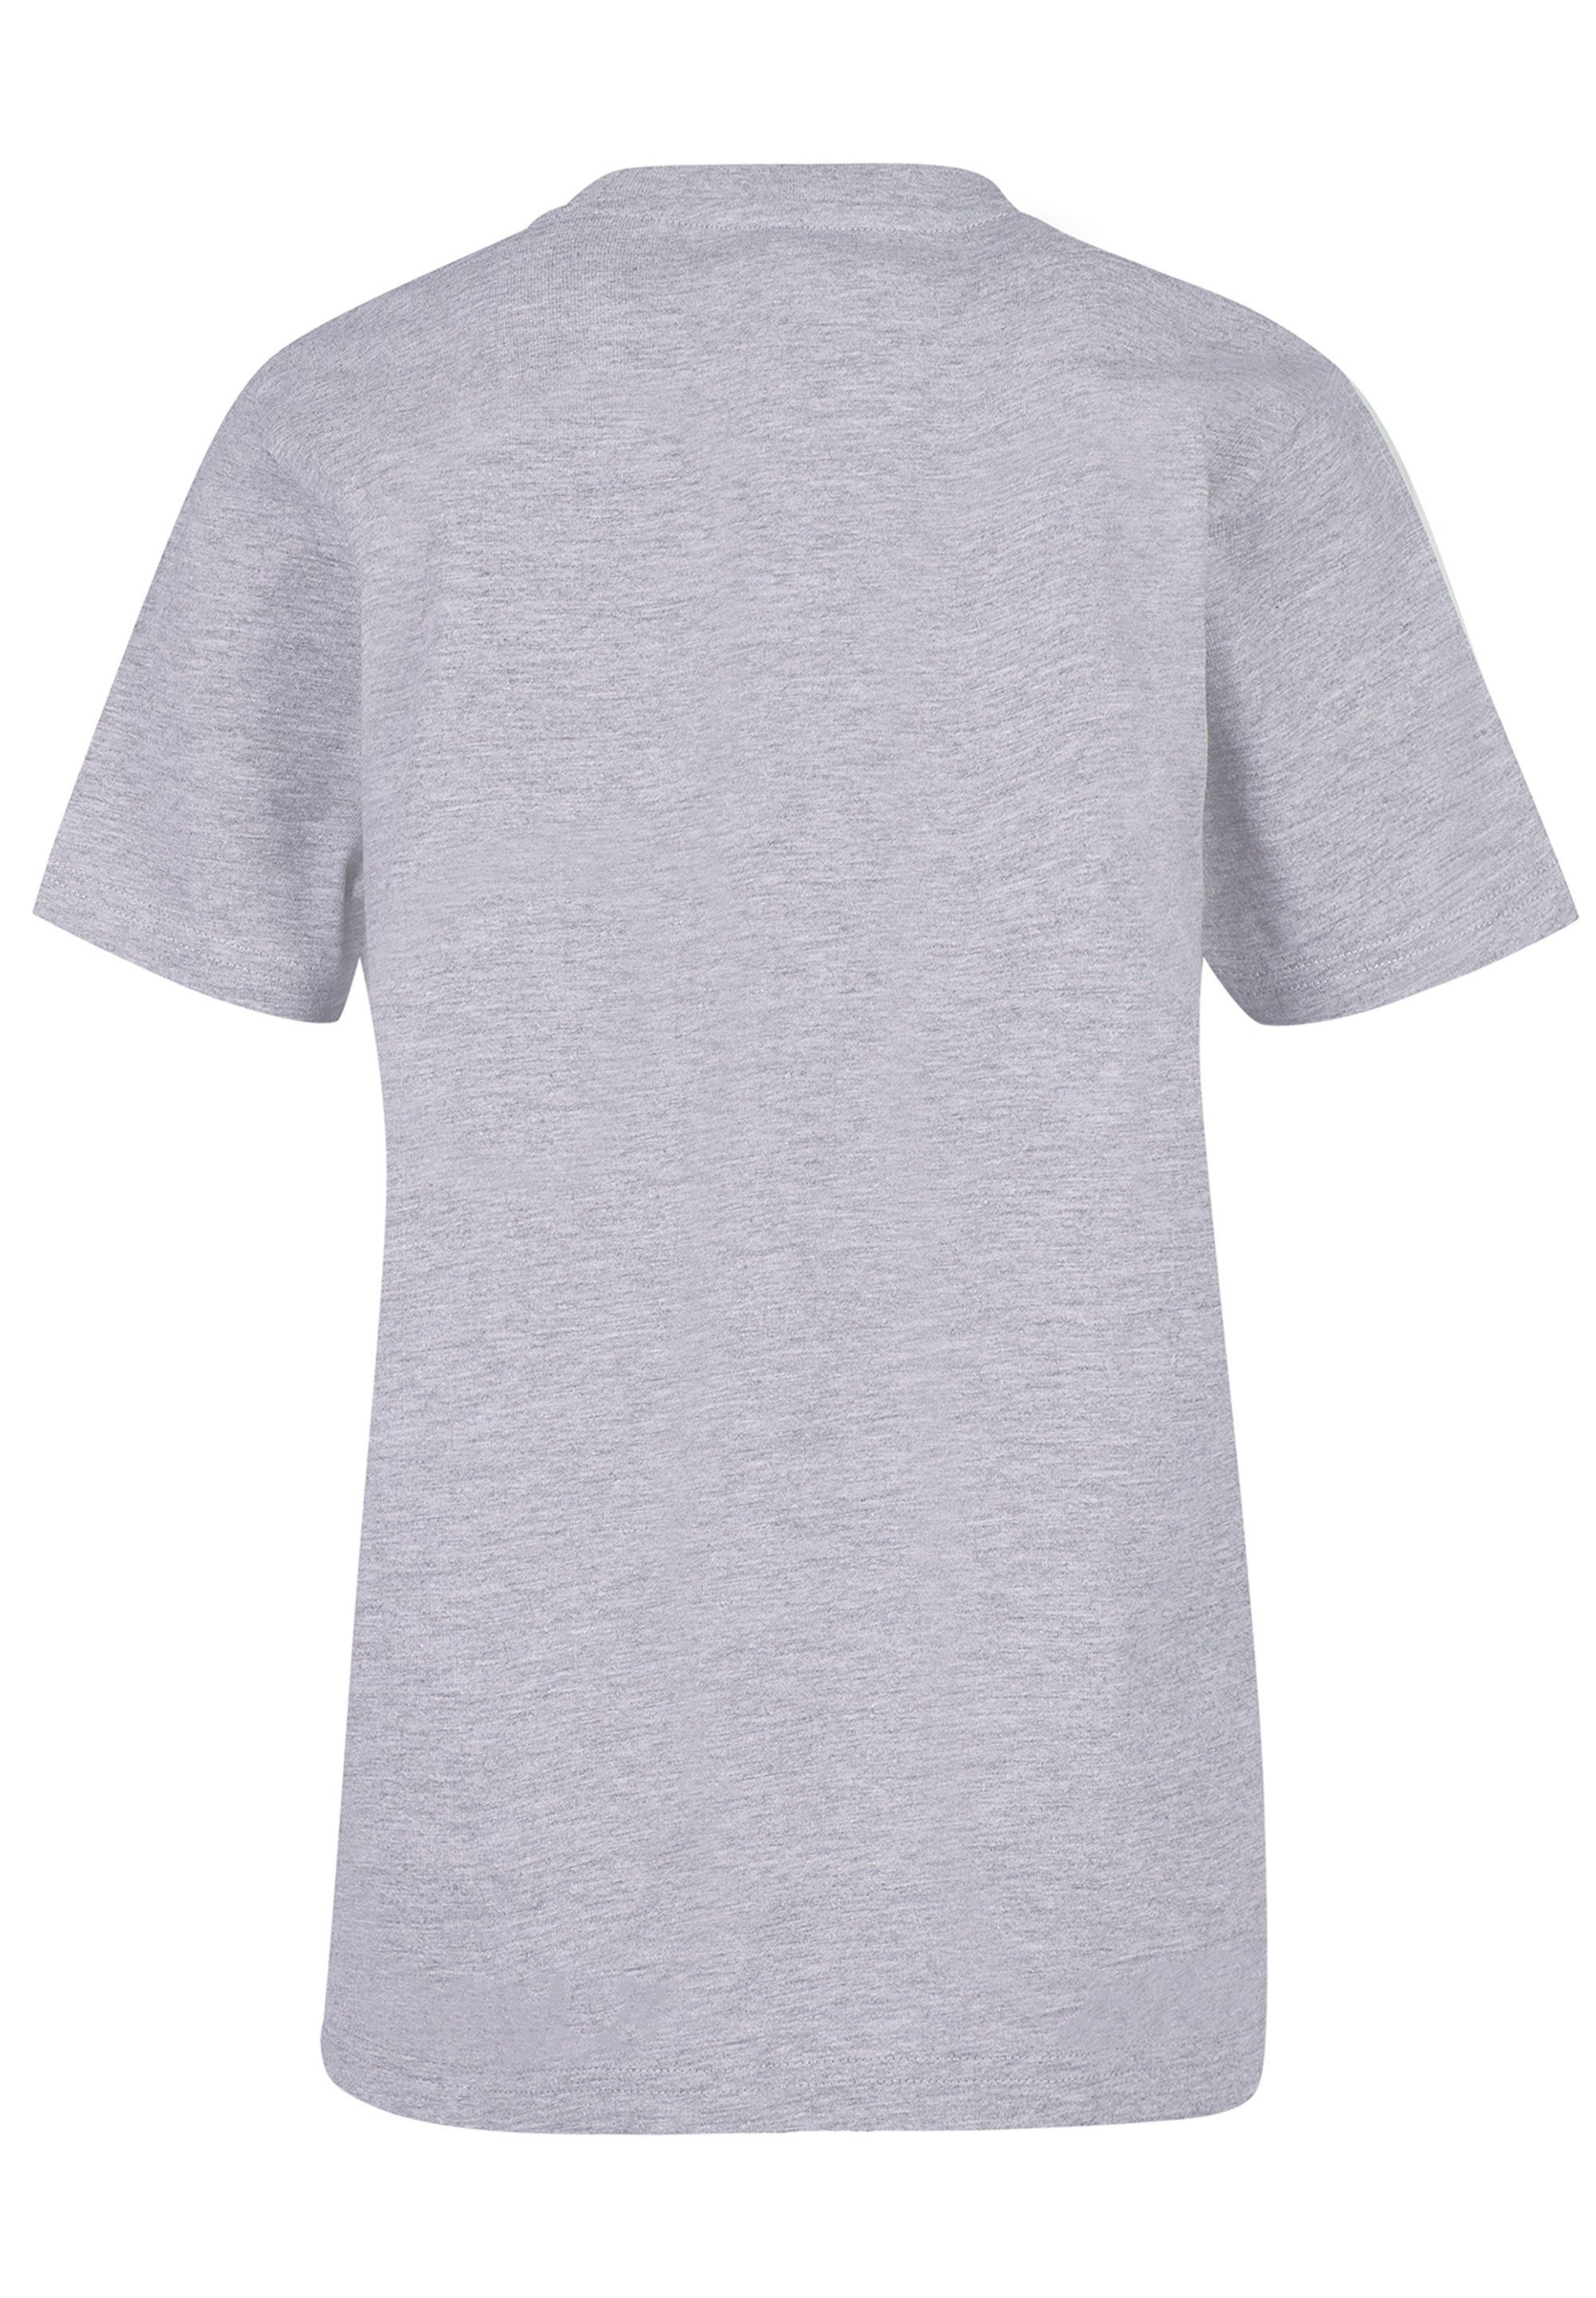 23 T-Shirt pink Pixel F4NT4STIC heather Print grey